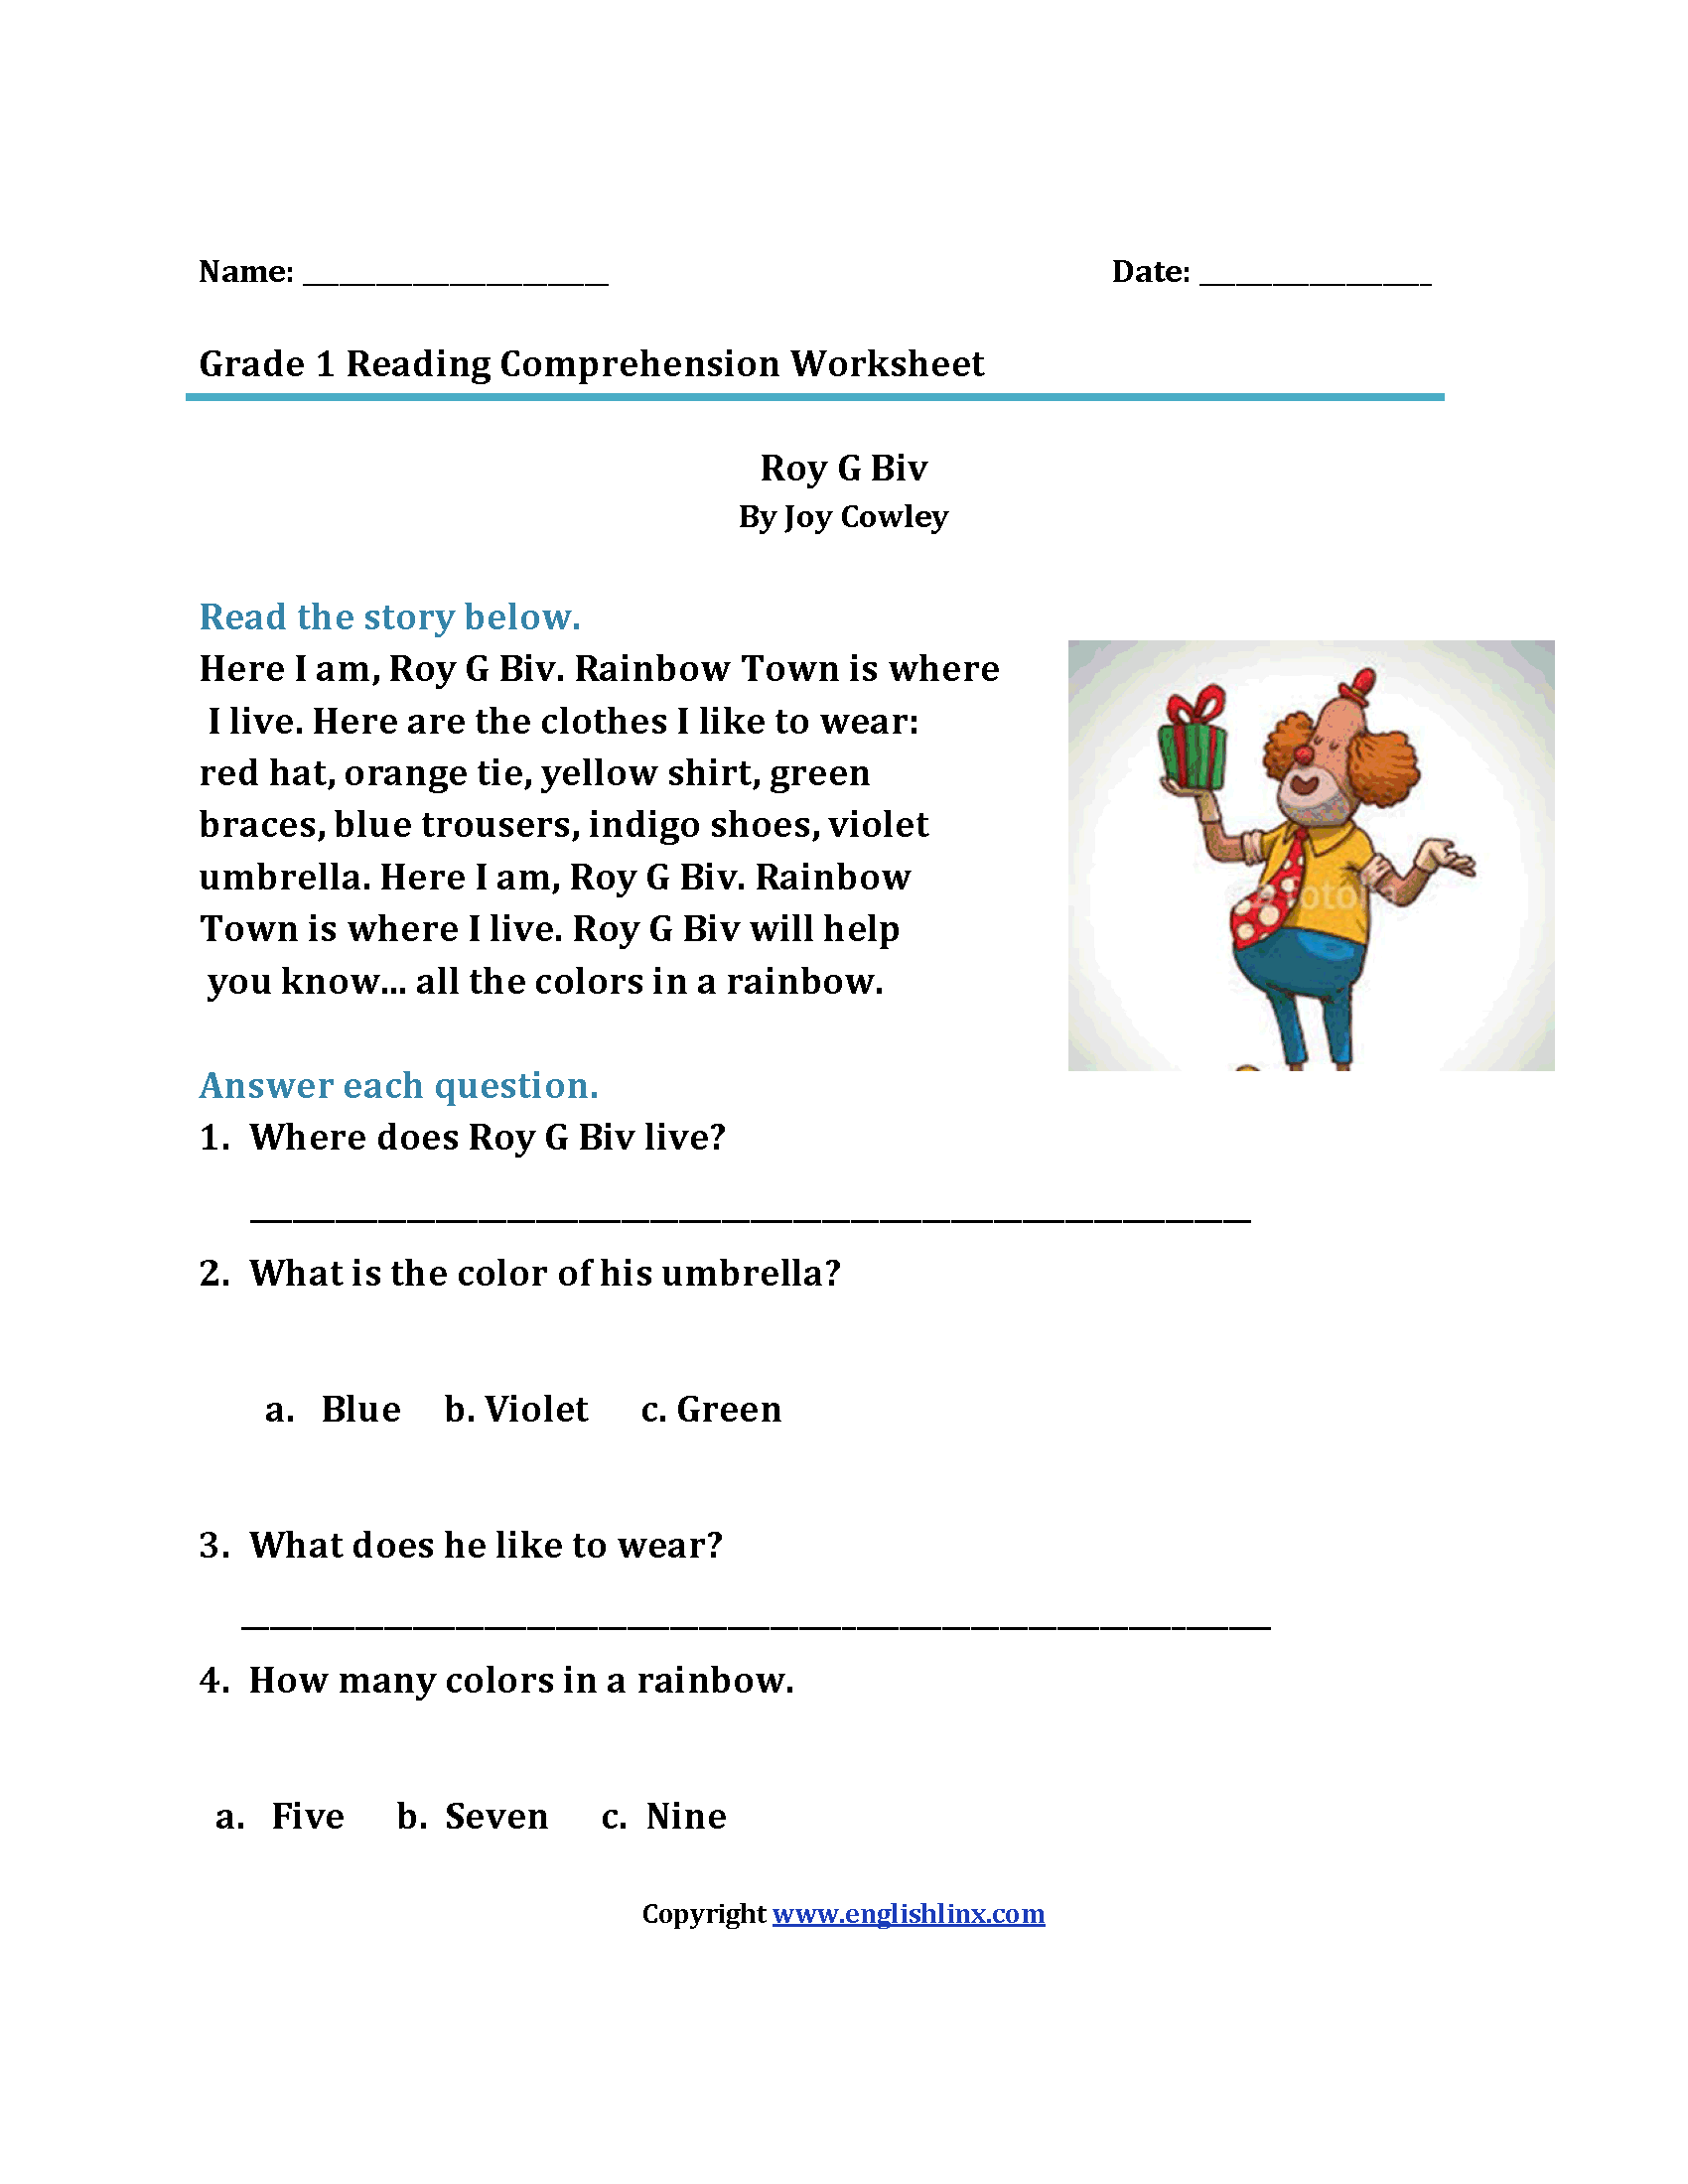 Roy G. Biv First Grade Reading Worksheets